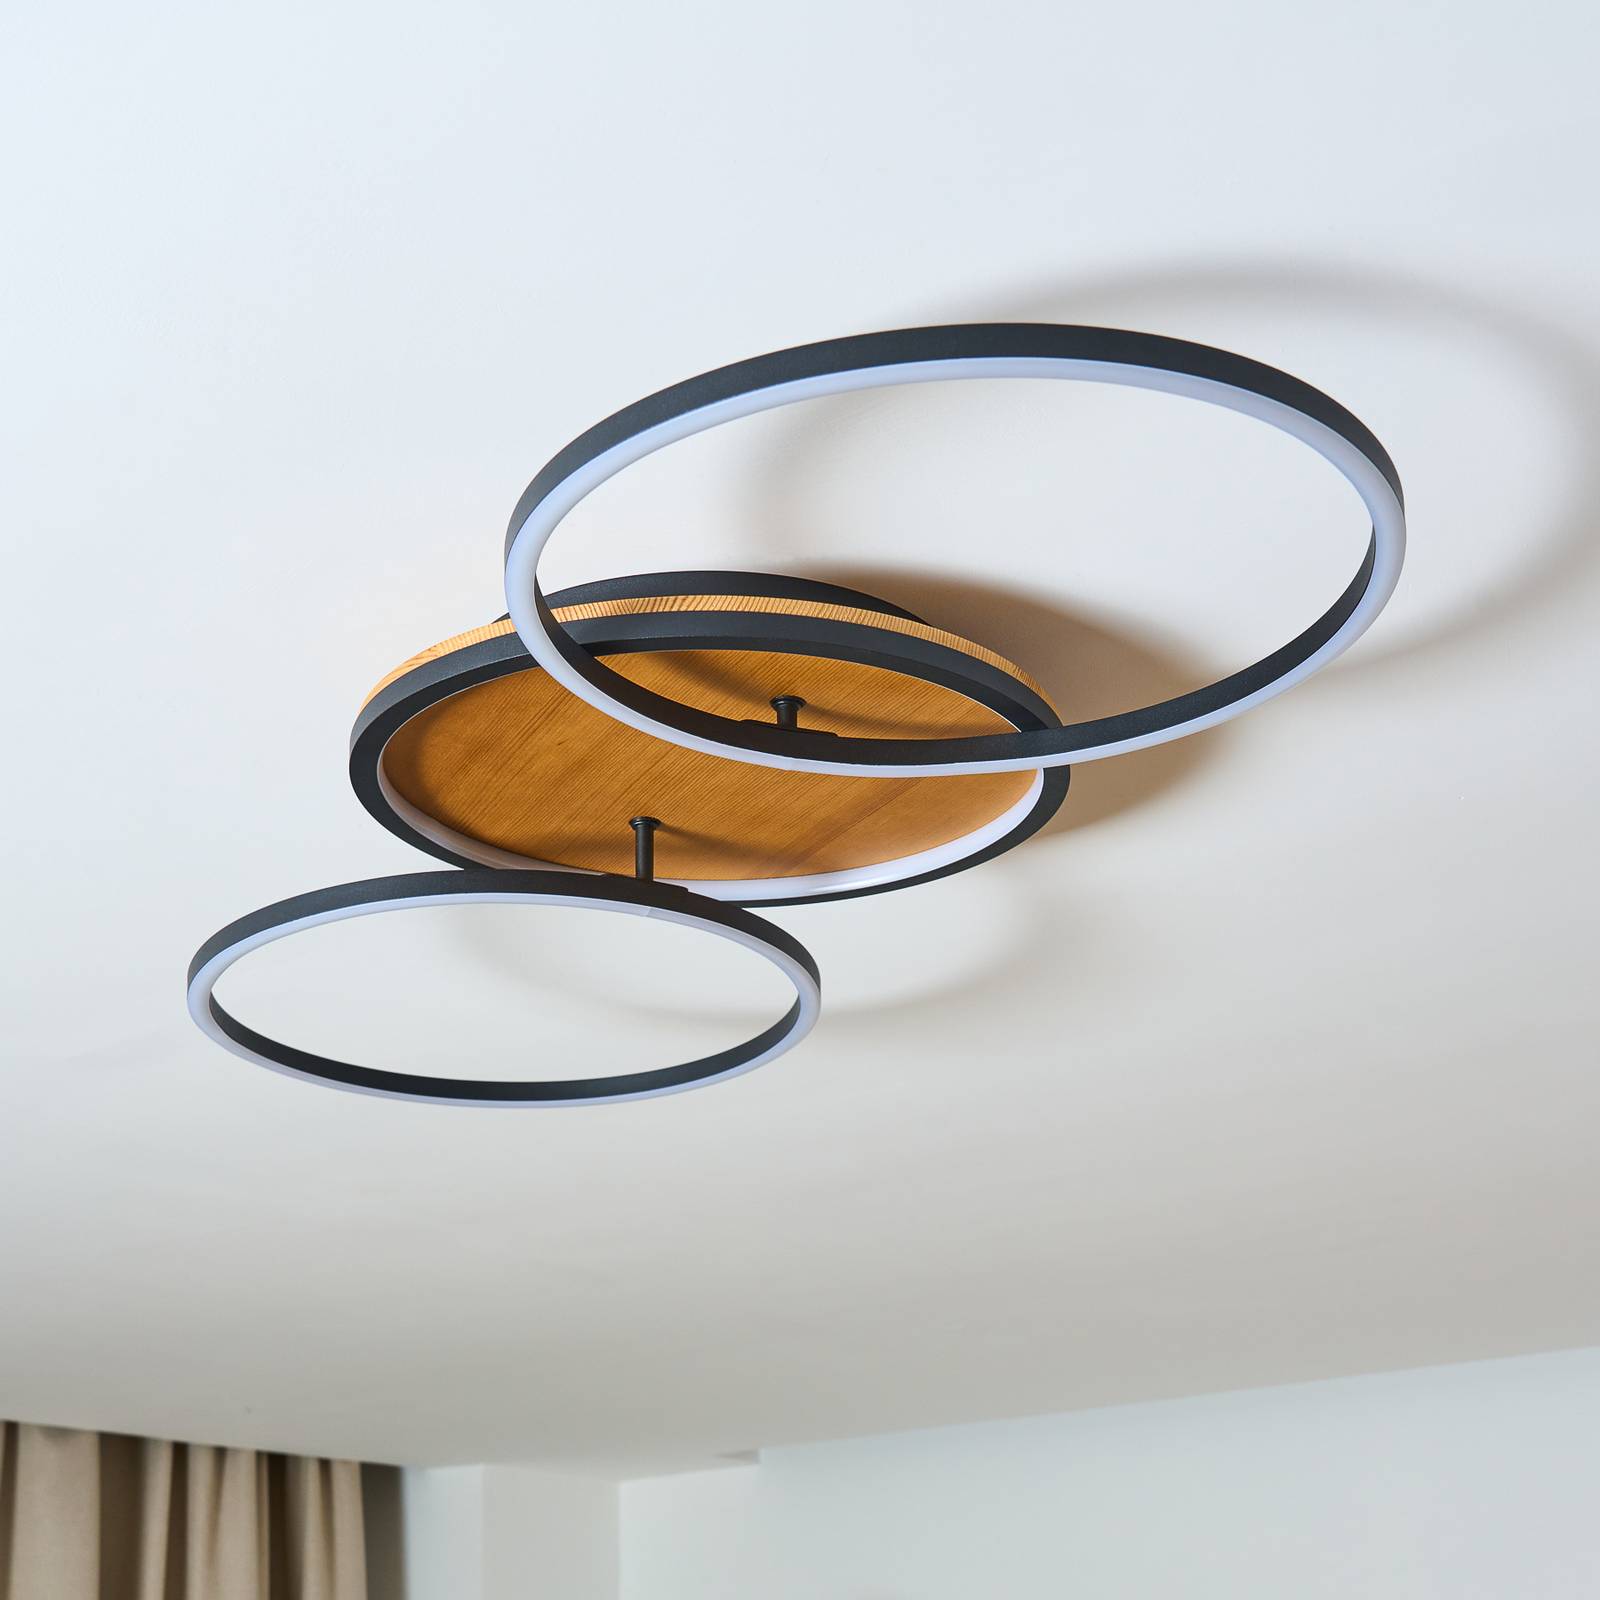 E-shop Kiru LED stropné svietidlo, borovica, dĺžka 87,4 cm, 2 svetlá, drevo